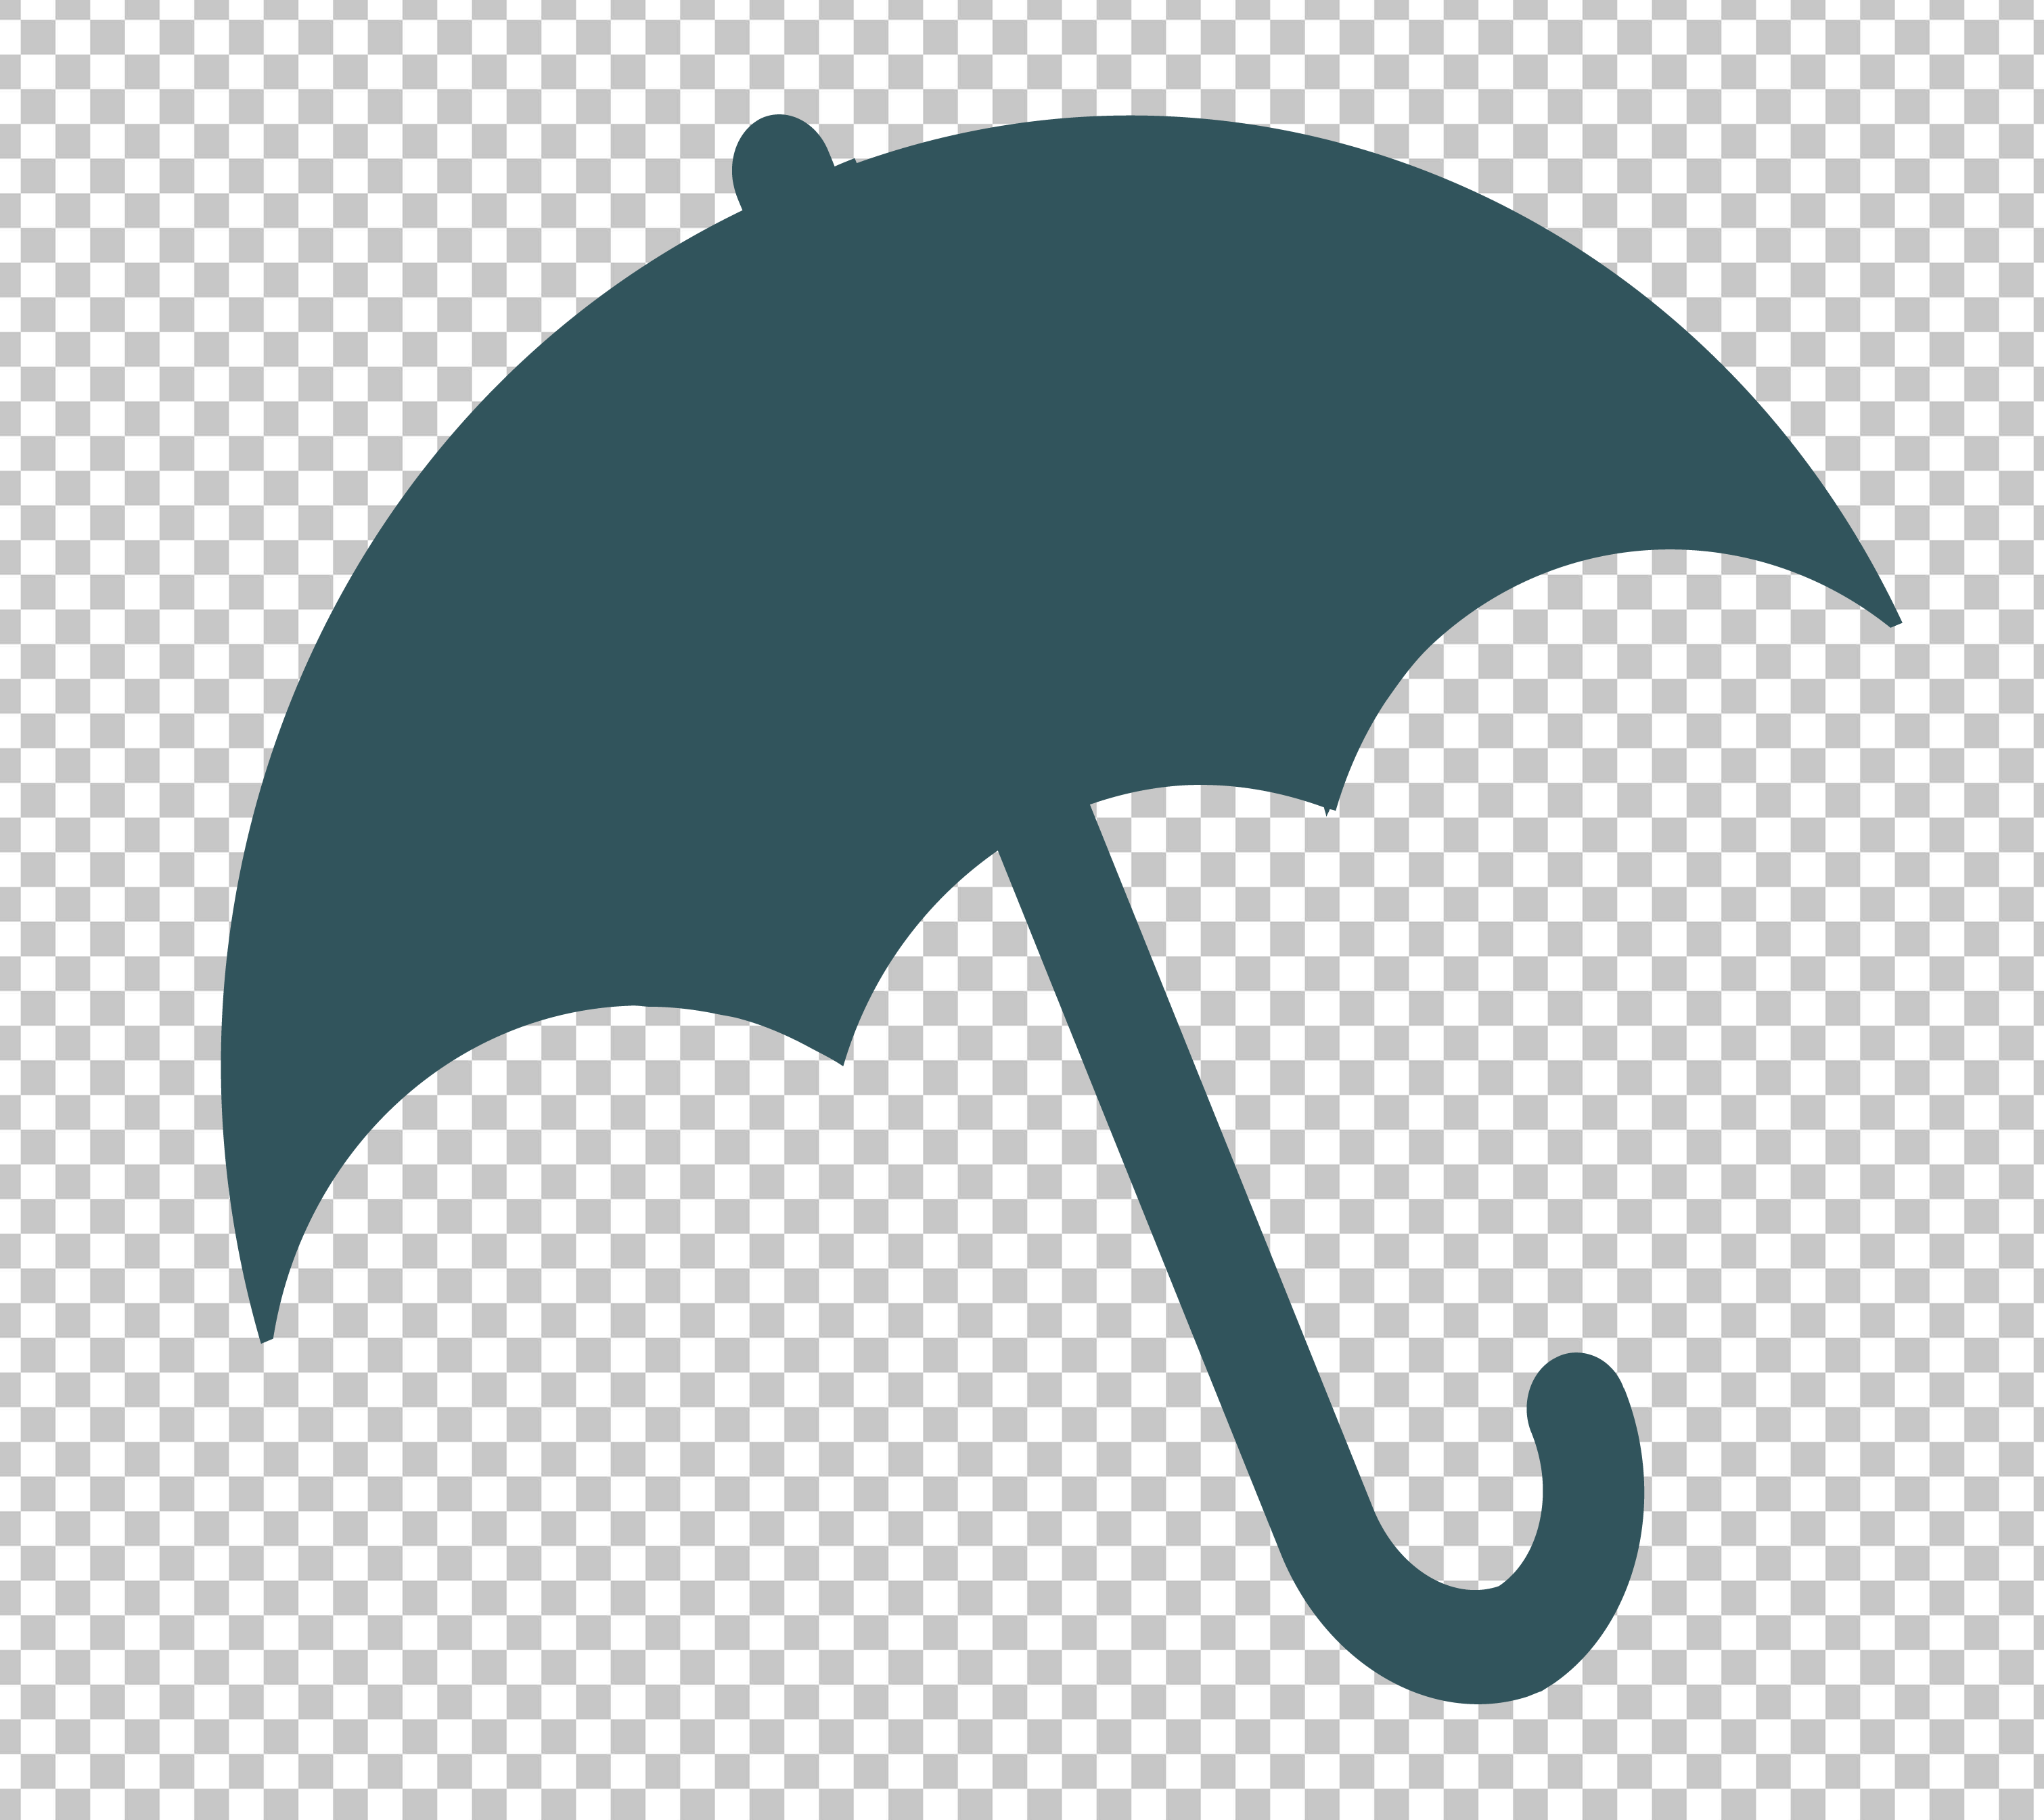 Umbrella icon PNG Image